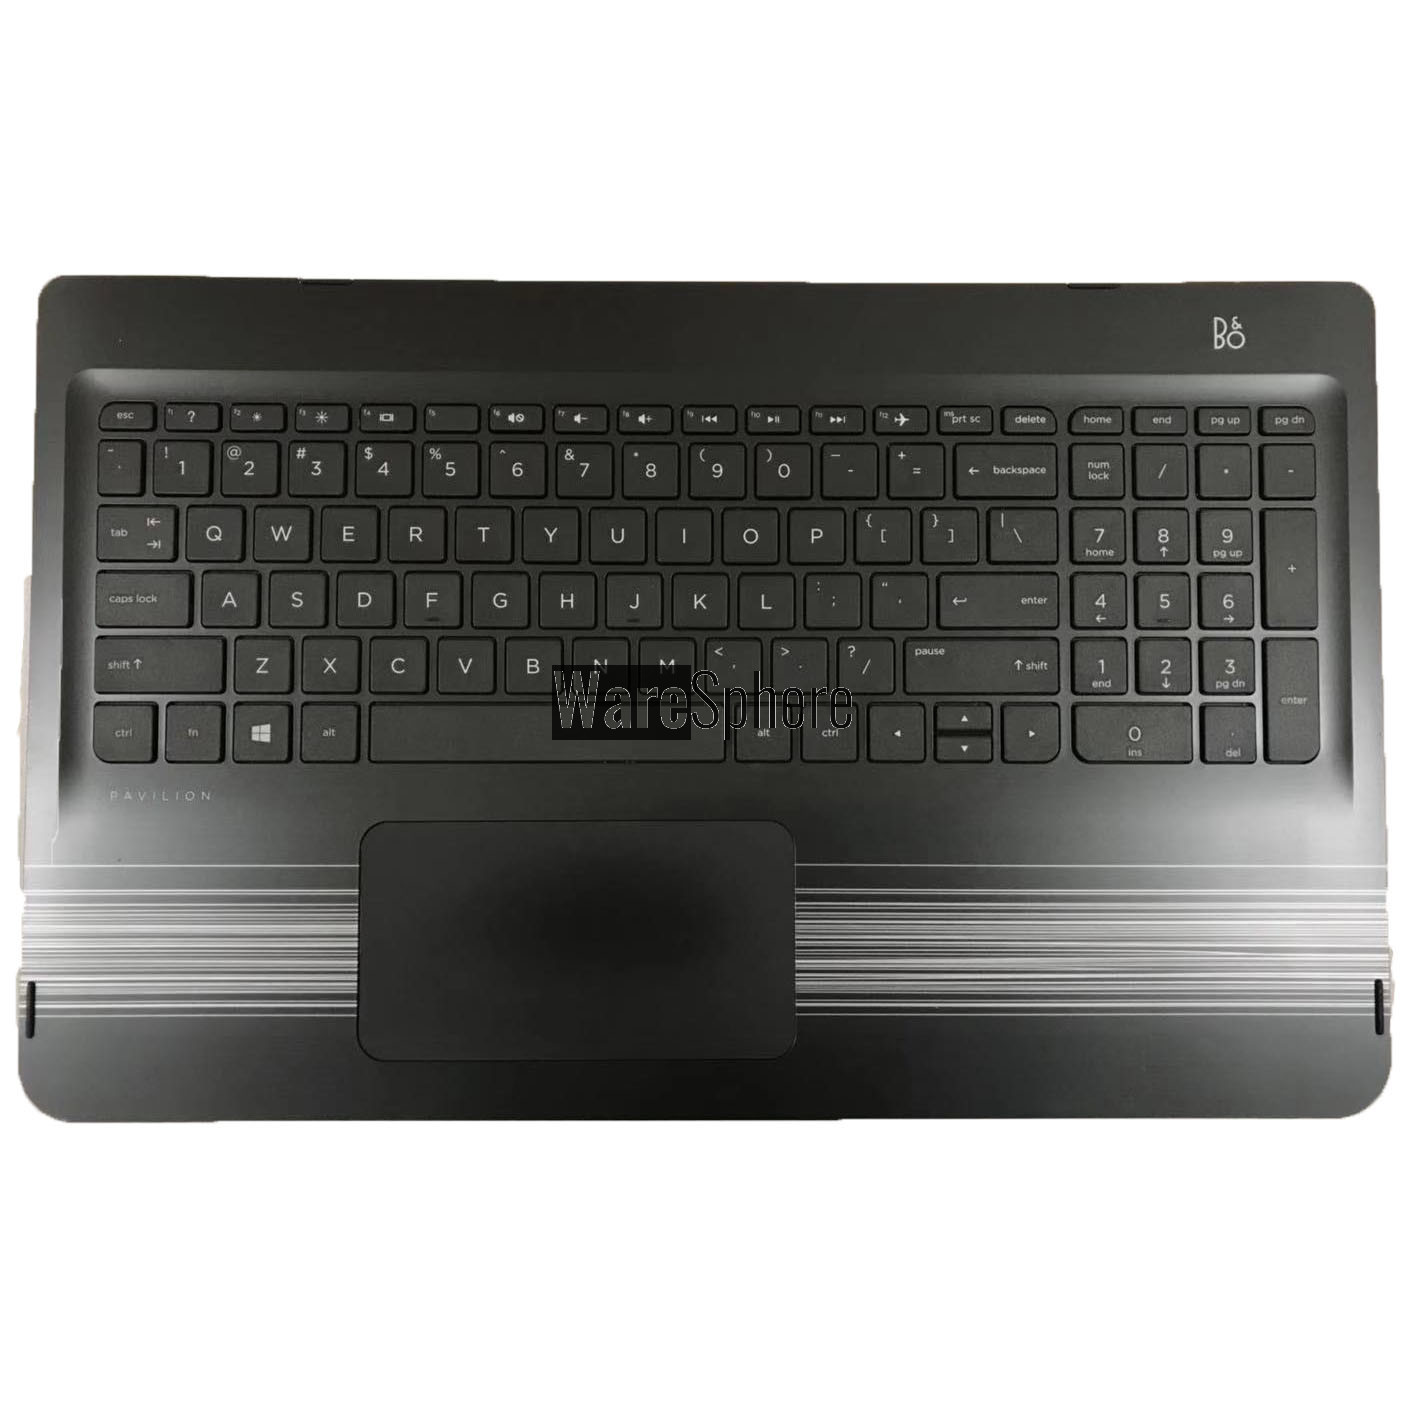 Top Cover Upper Case For HP Pavilion X360 15-BK 15T-BK With Nonbacklit keyboard 862648-001